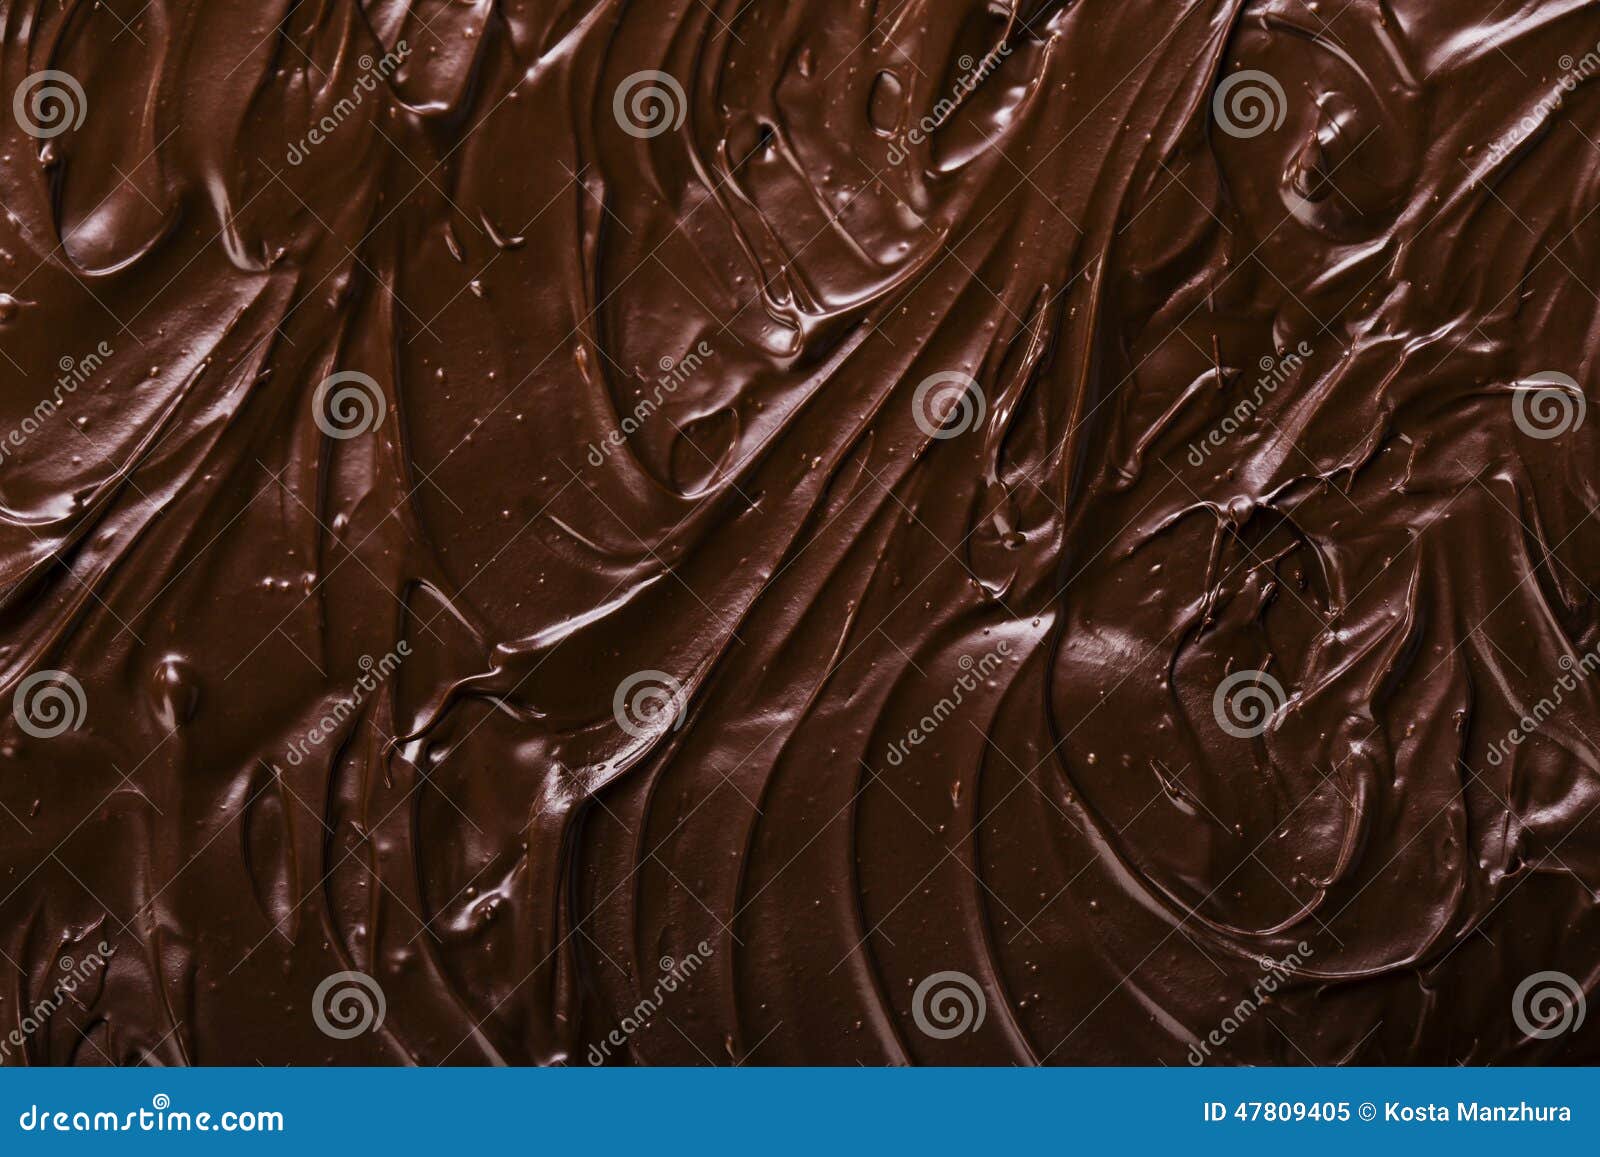 Chocolate Icing Royalty-Free Stock Photo | CartoonDealer.com #12760503